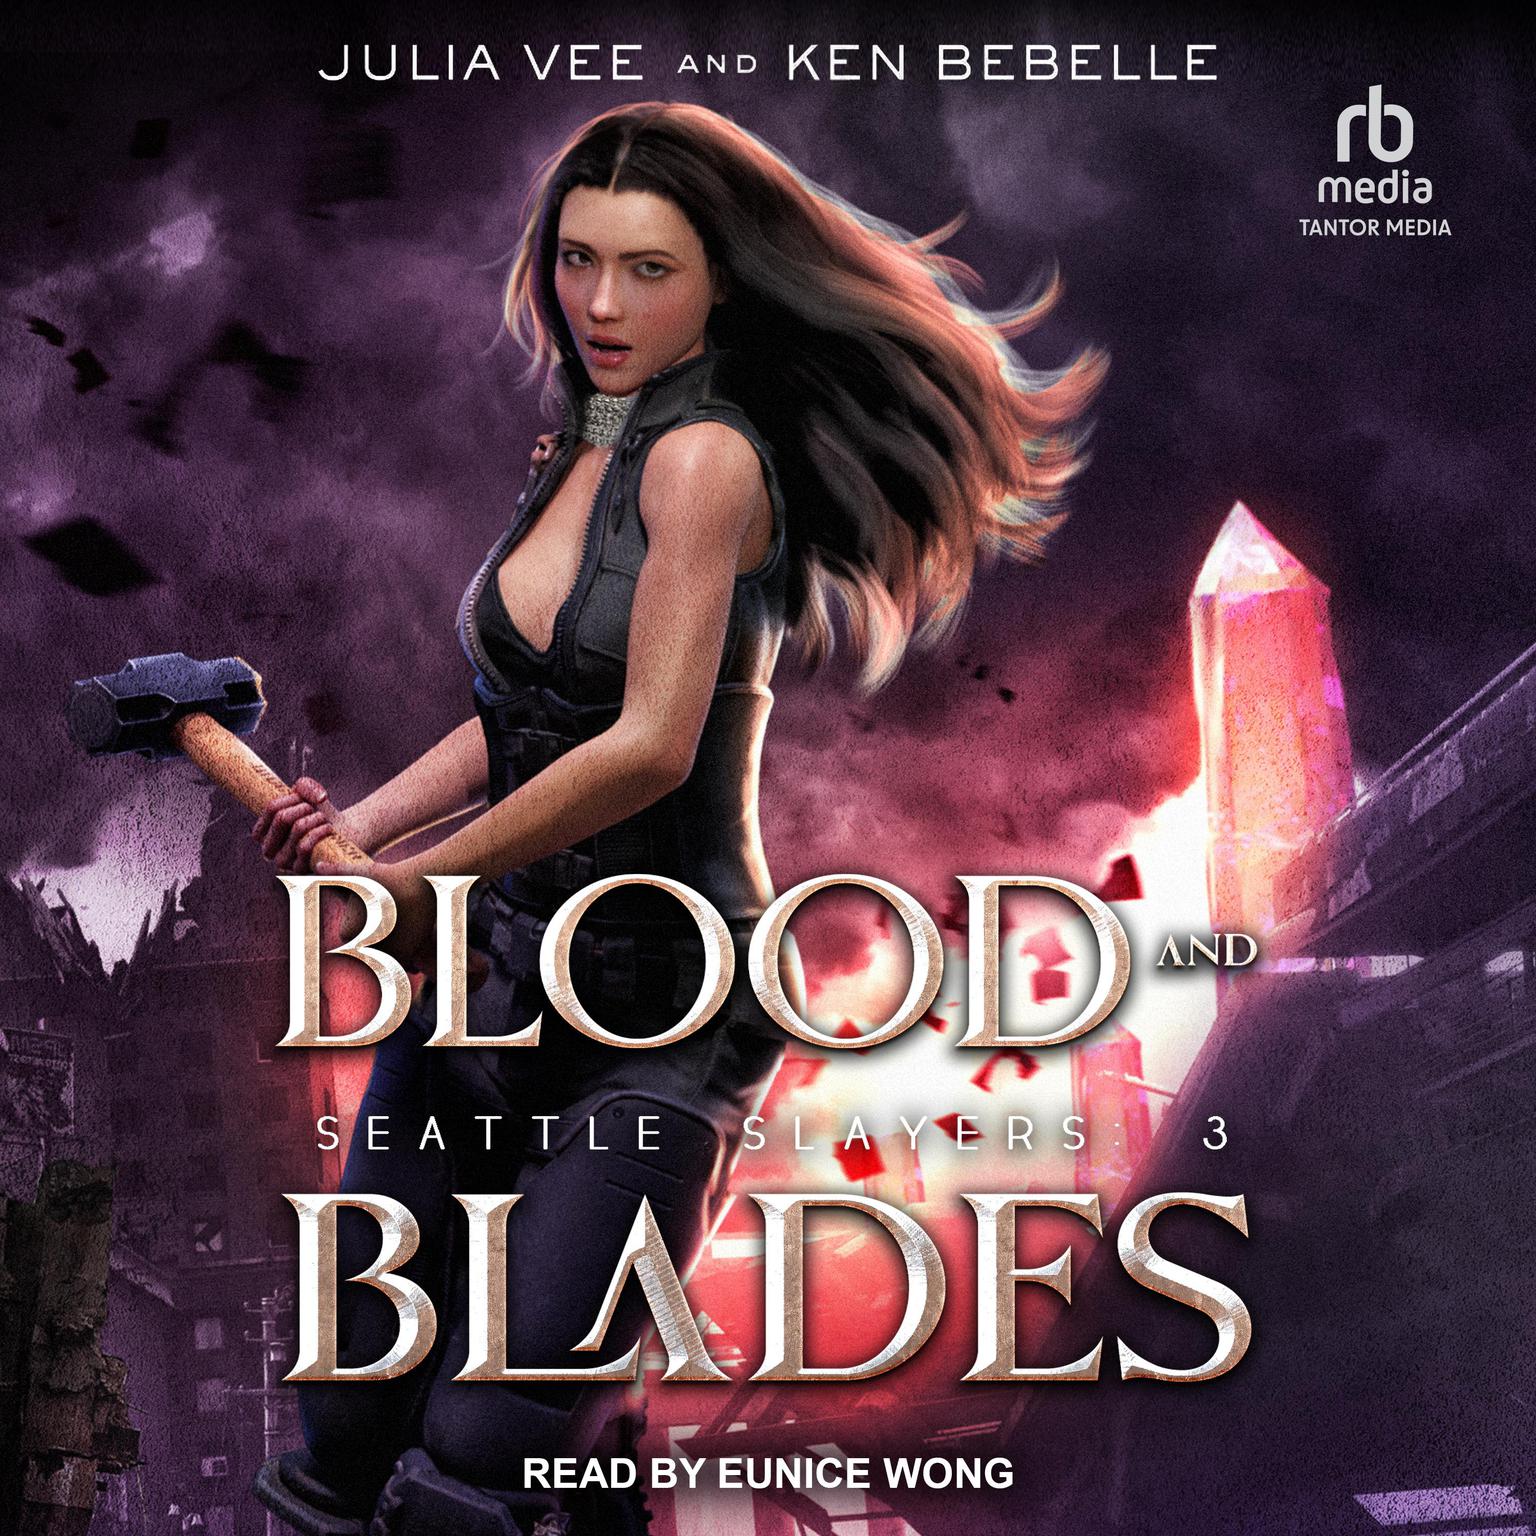 Blood and Blades Audiobook, by Julia Vee